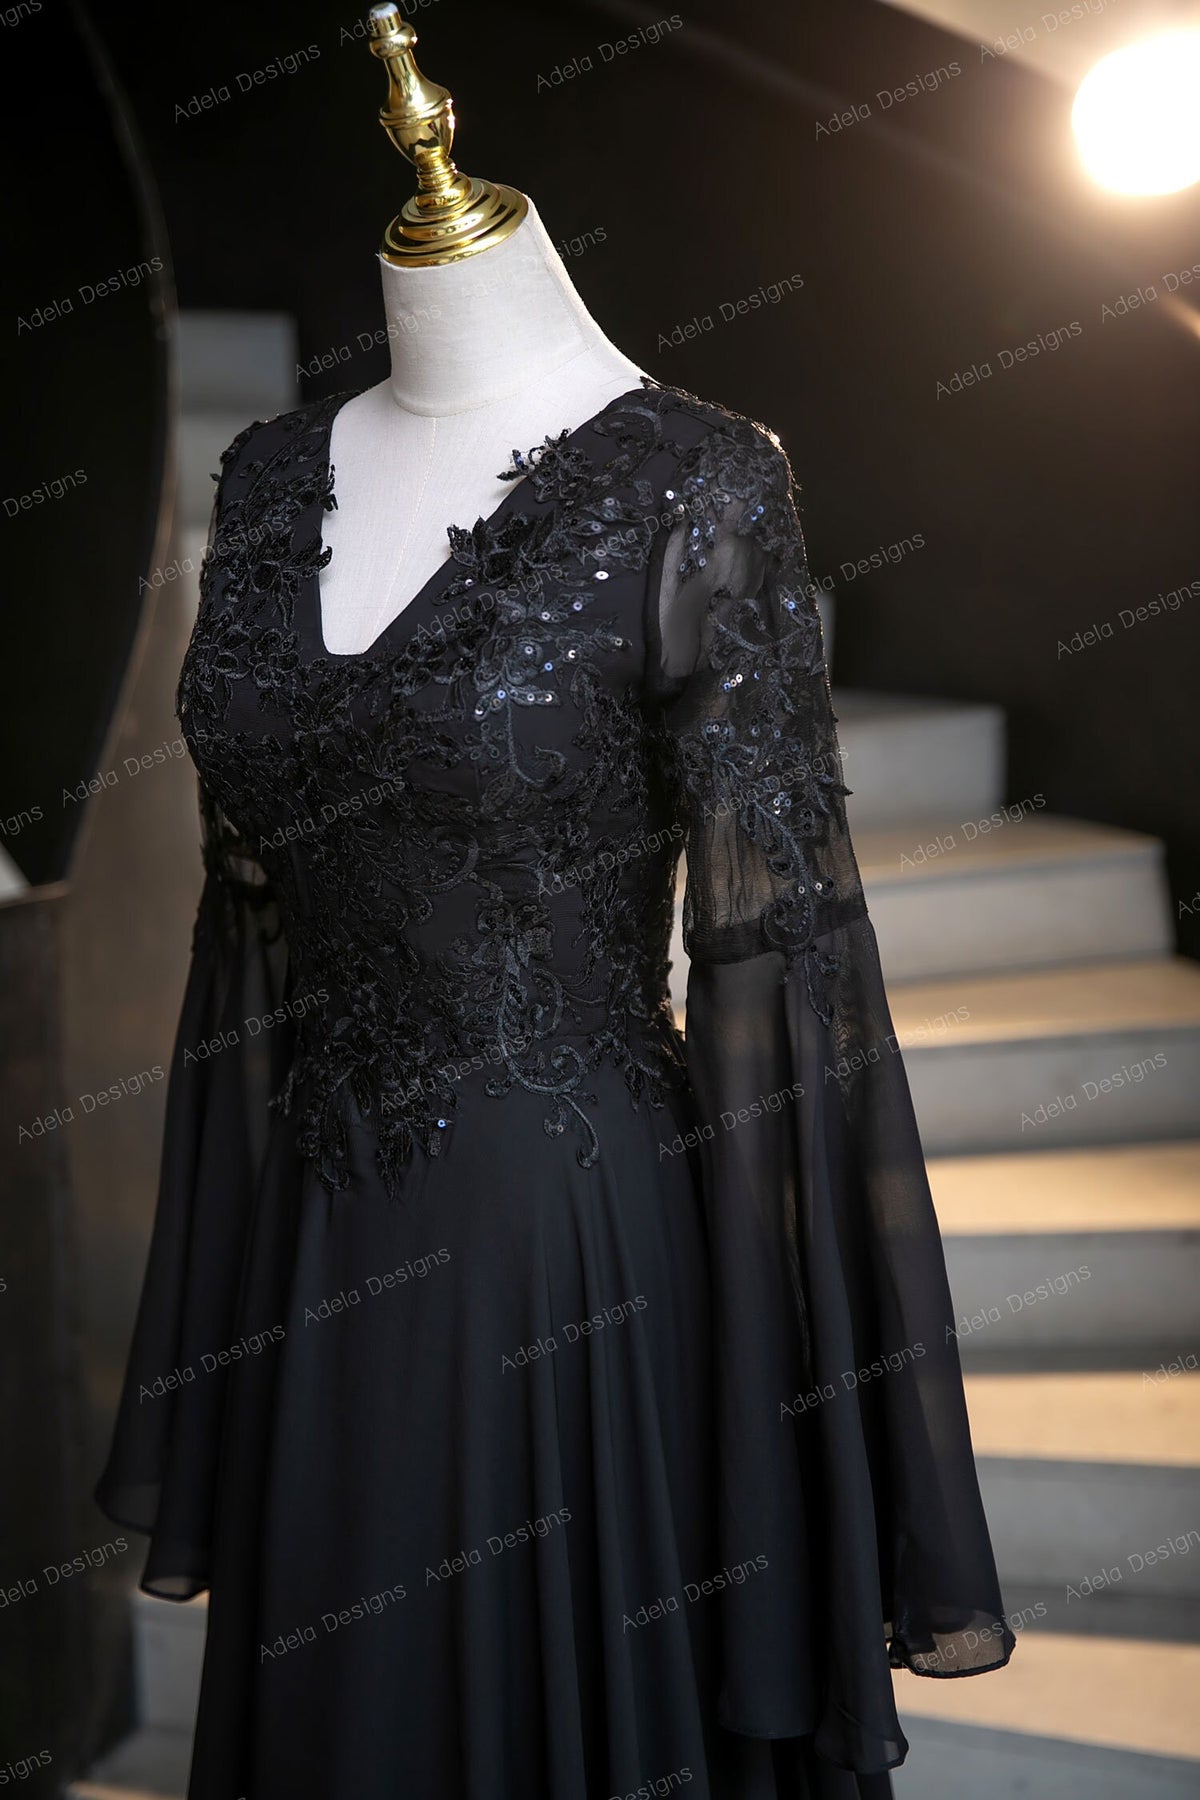 Vintage Gothic Black Aline Long Bell Sleeves Chiffon Wedding Dress Bridal Gown Open Back Short Train Plus Size V Neckline